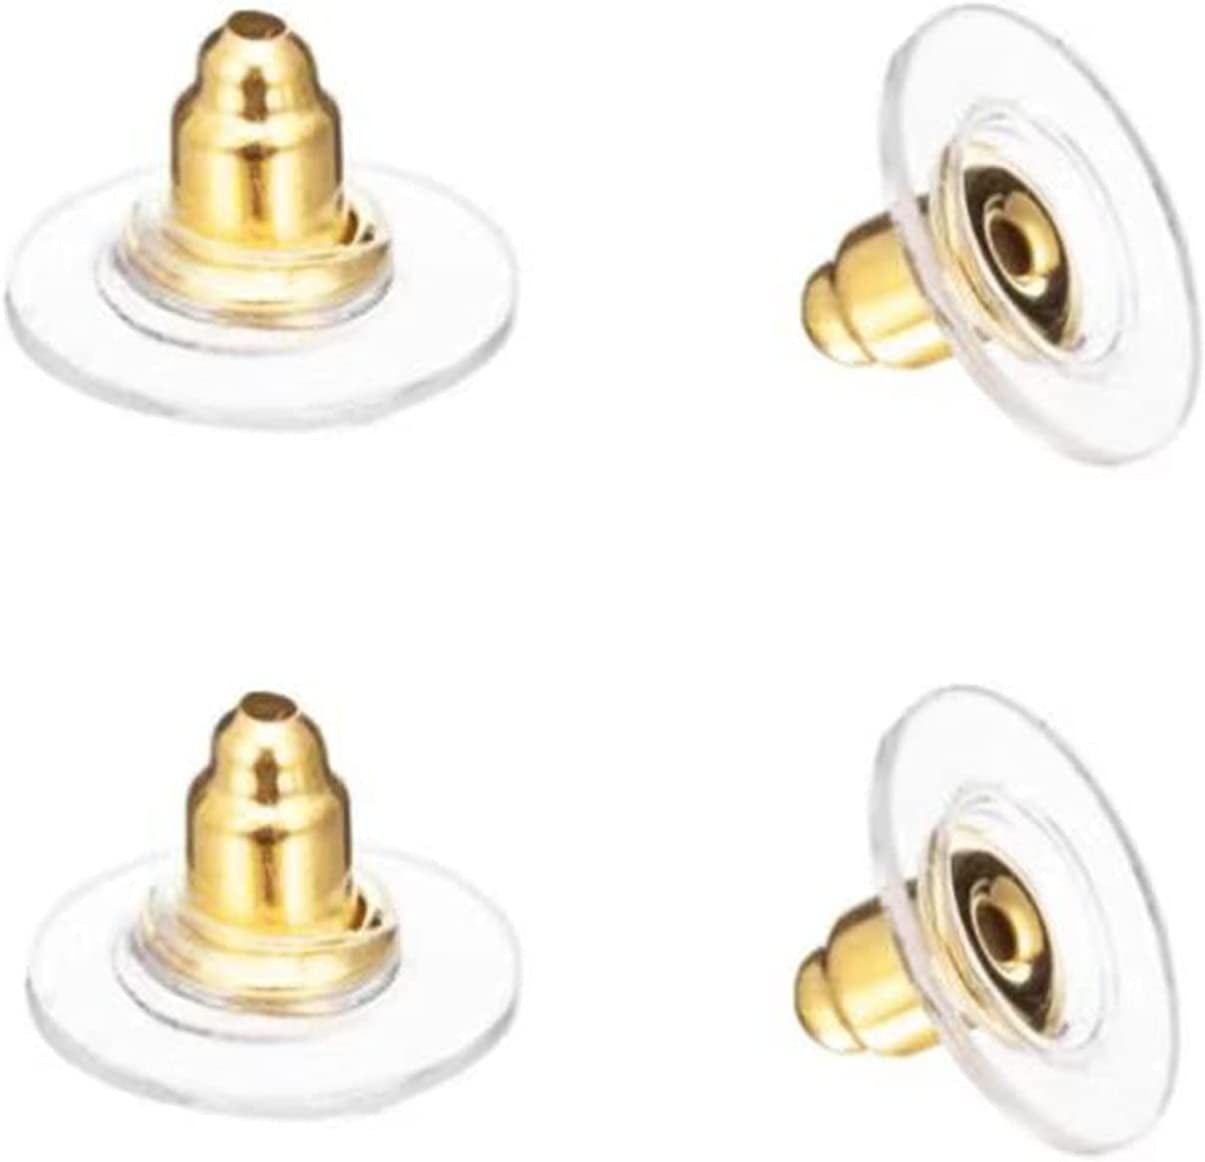 Earring BacksBack Earrings Fishhook Earring Backs for Droopy Ears Earring  Backs Replacements Bullet Clutch Back Earrings Replacement Earring Backs  for Heavy Earring Silver and Gold  Walmartcom